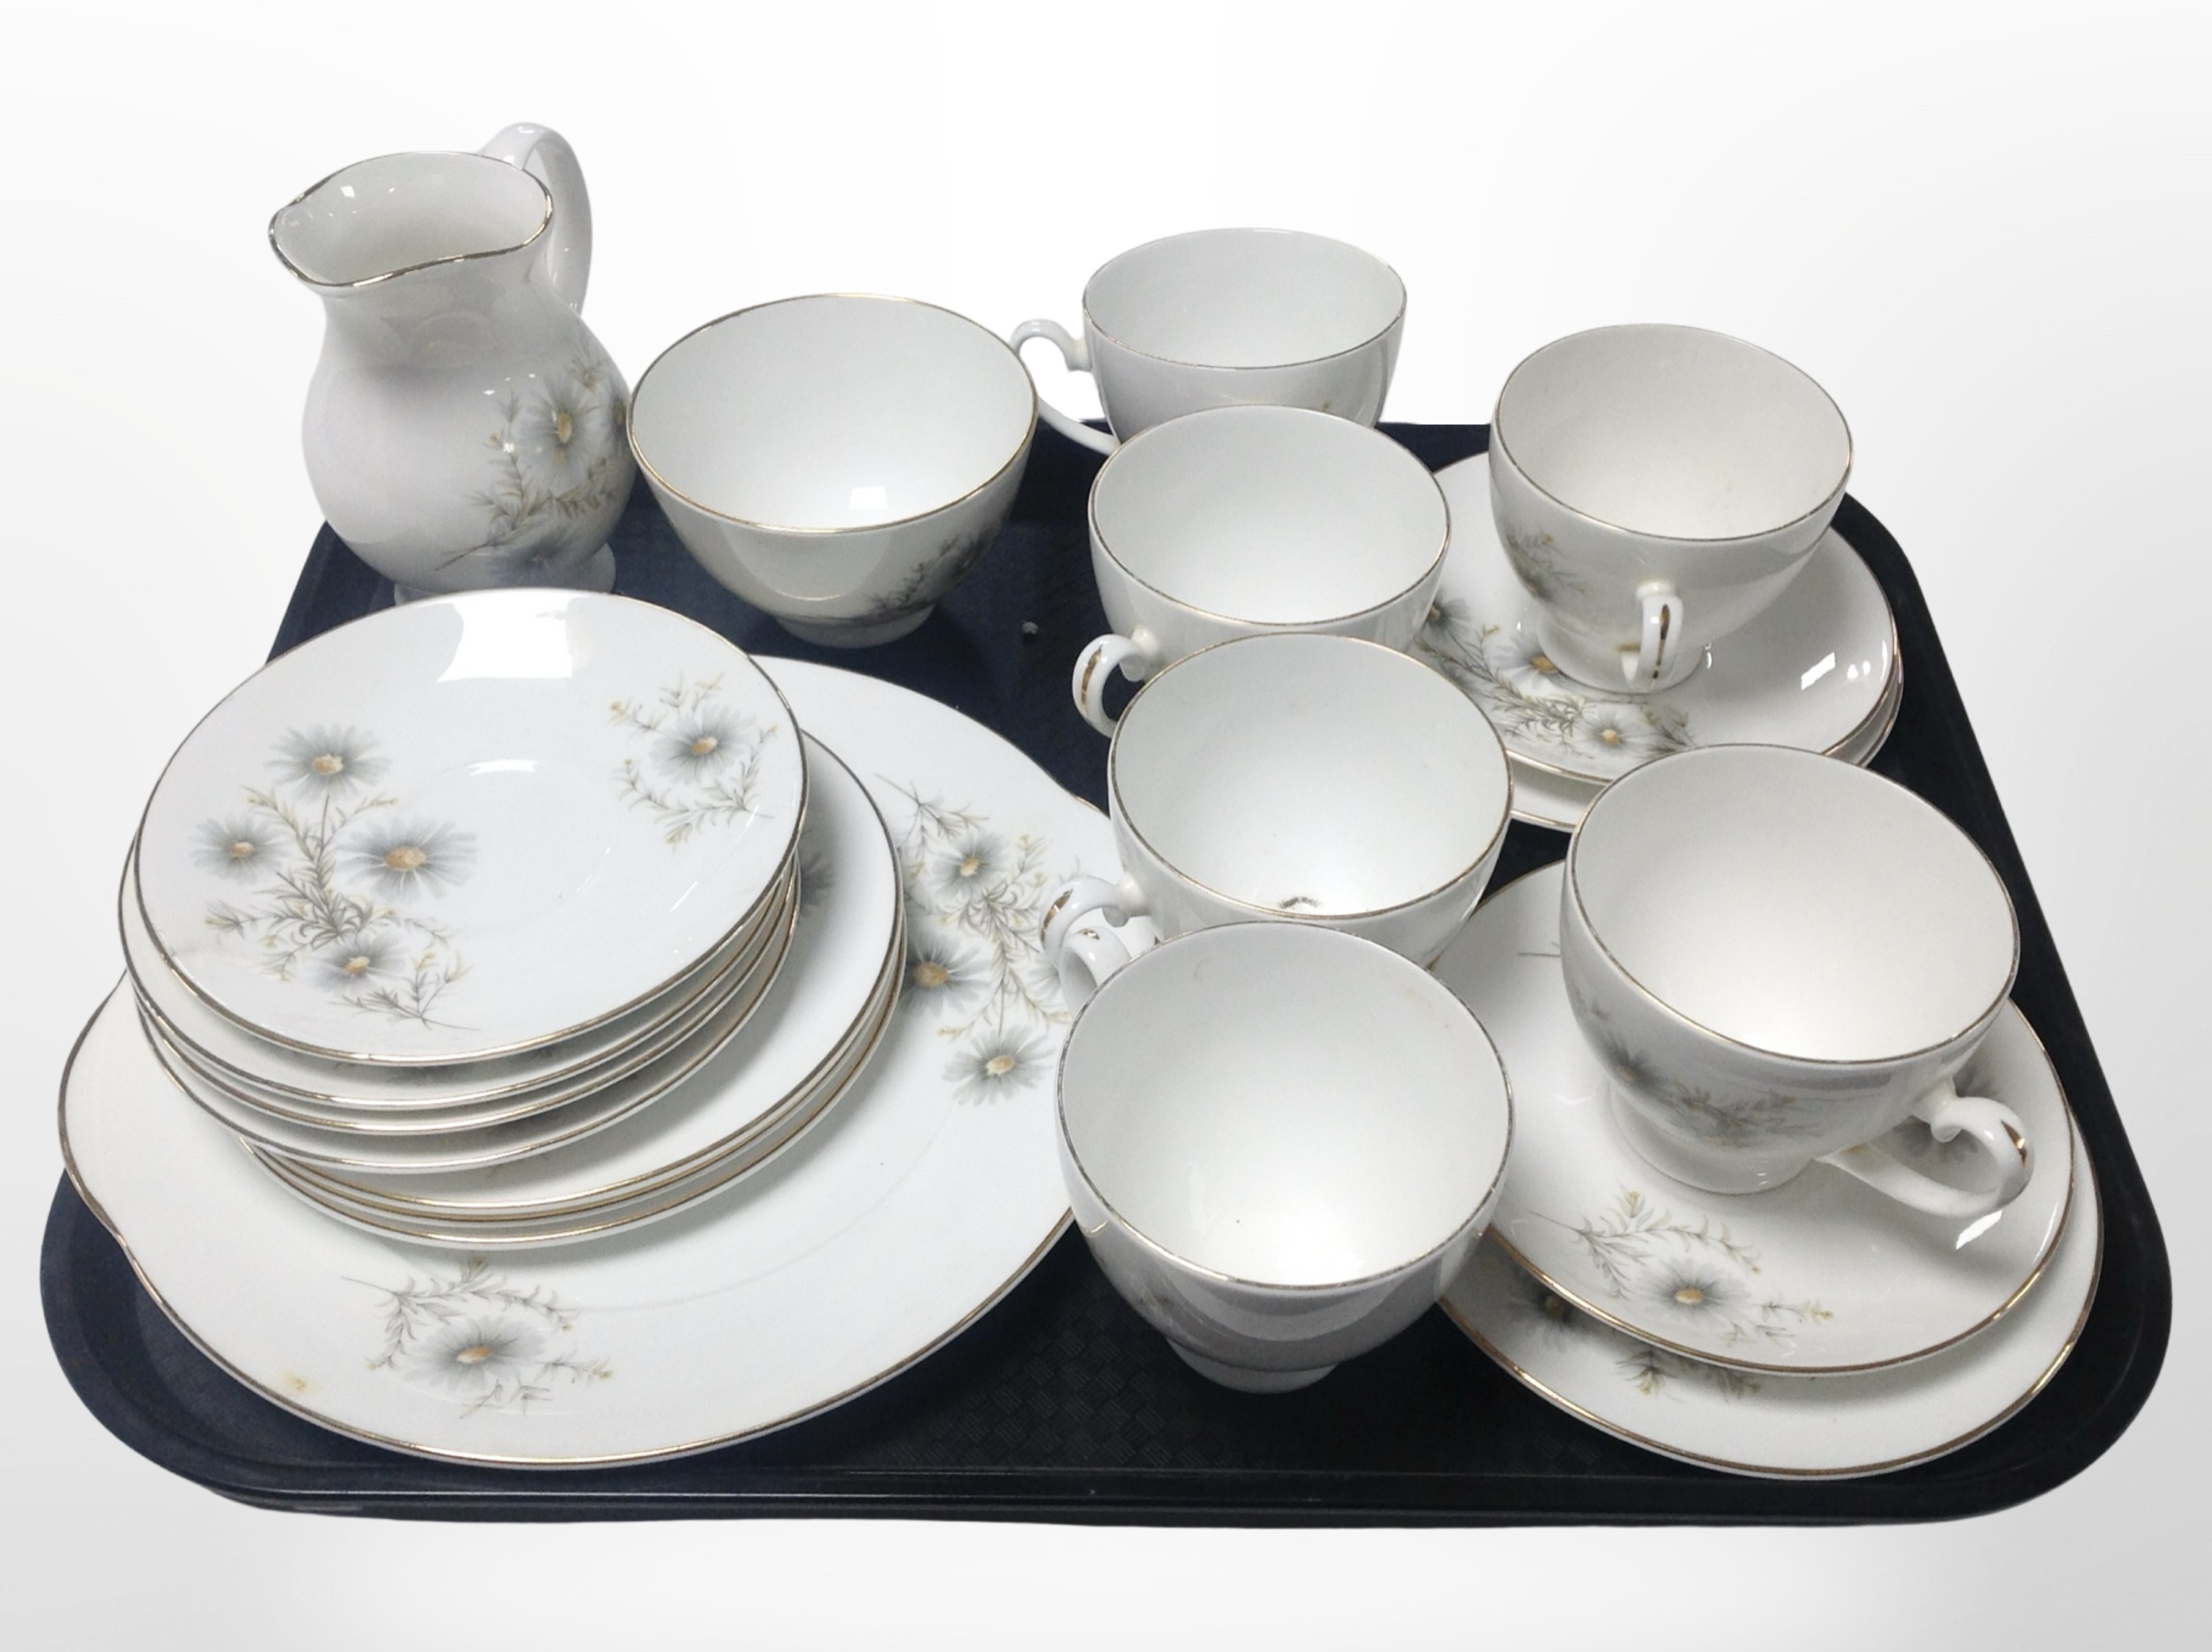 Twenty pieces of Royal Grafton tea china.